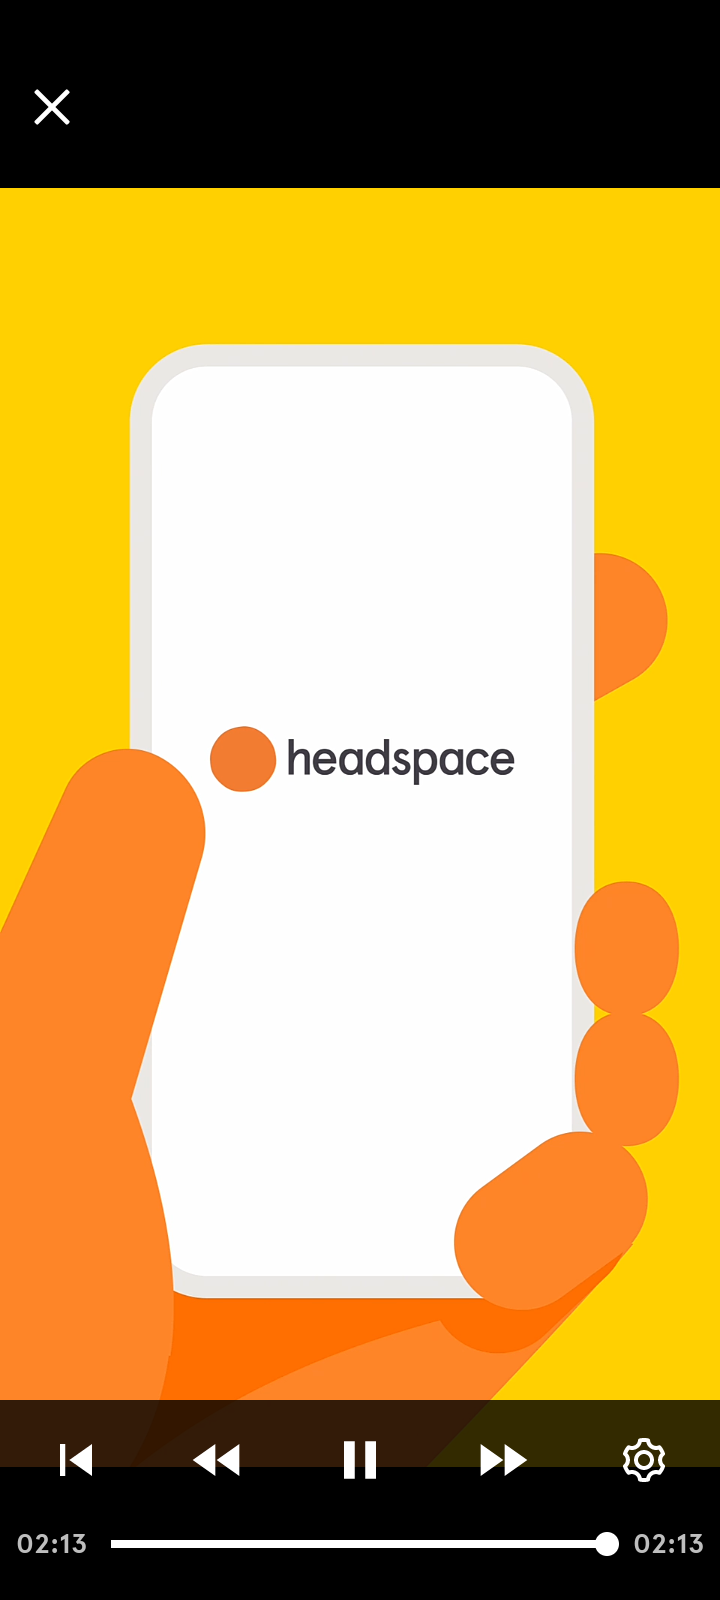  Headspace Watching Video user flow UI screenshot